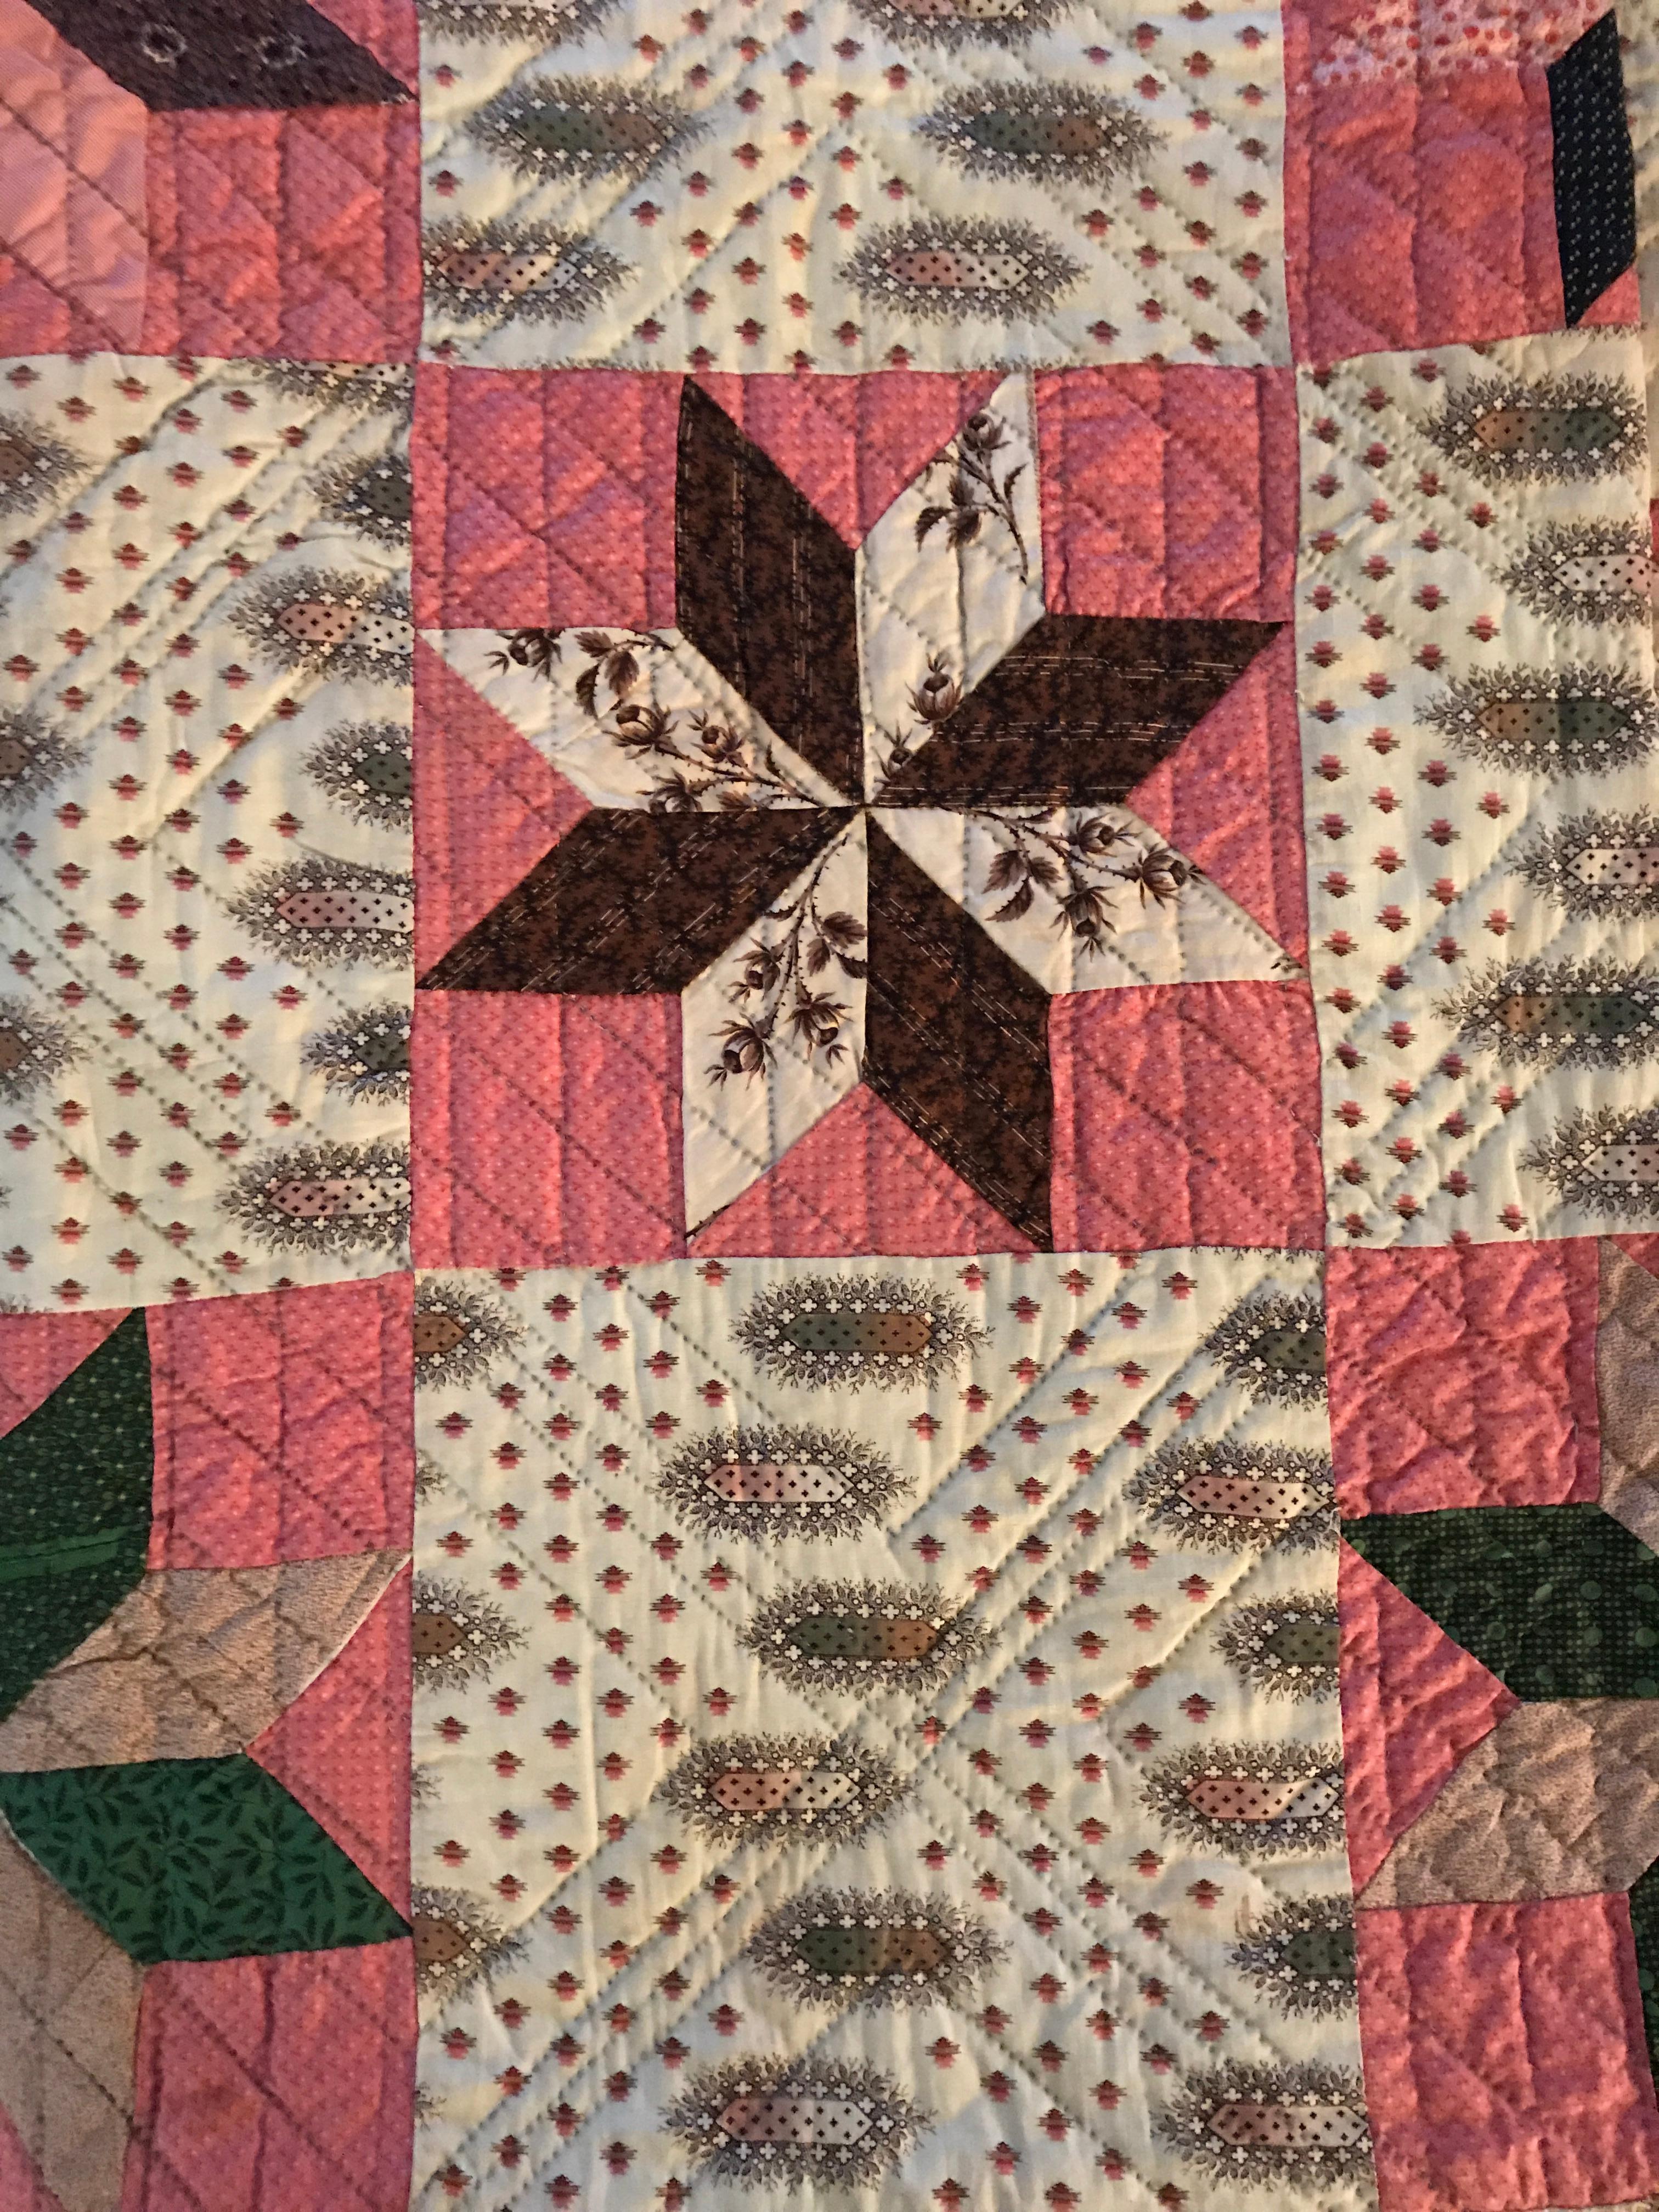 American Antique Multicolored Patchwork Quilt